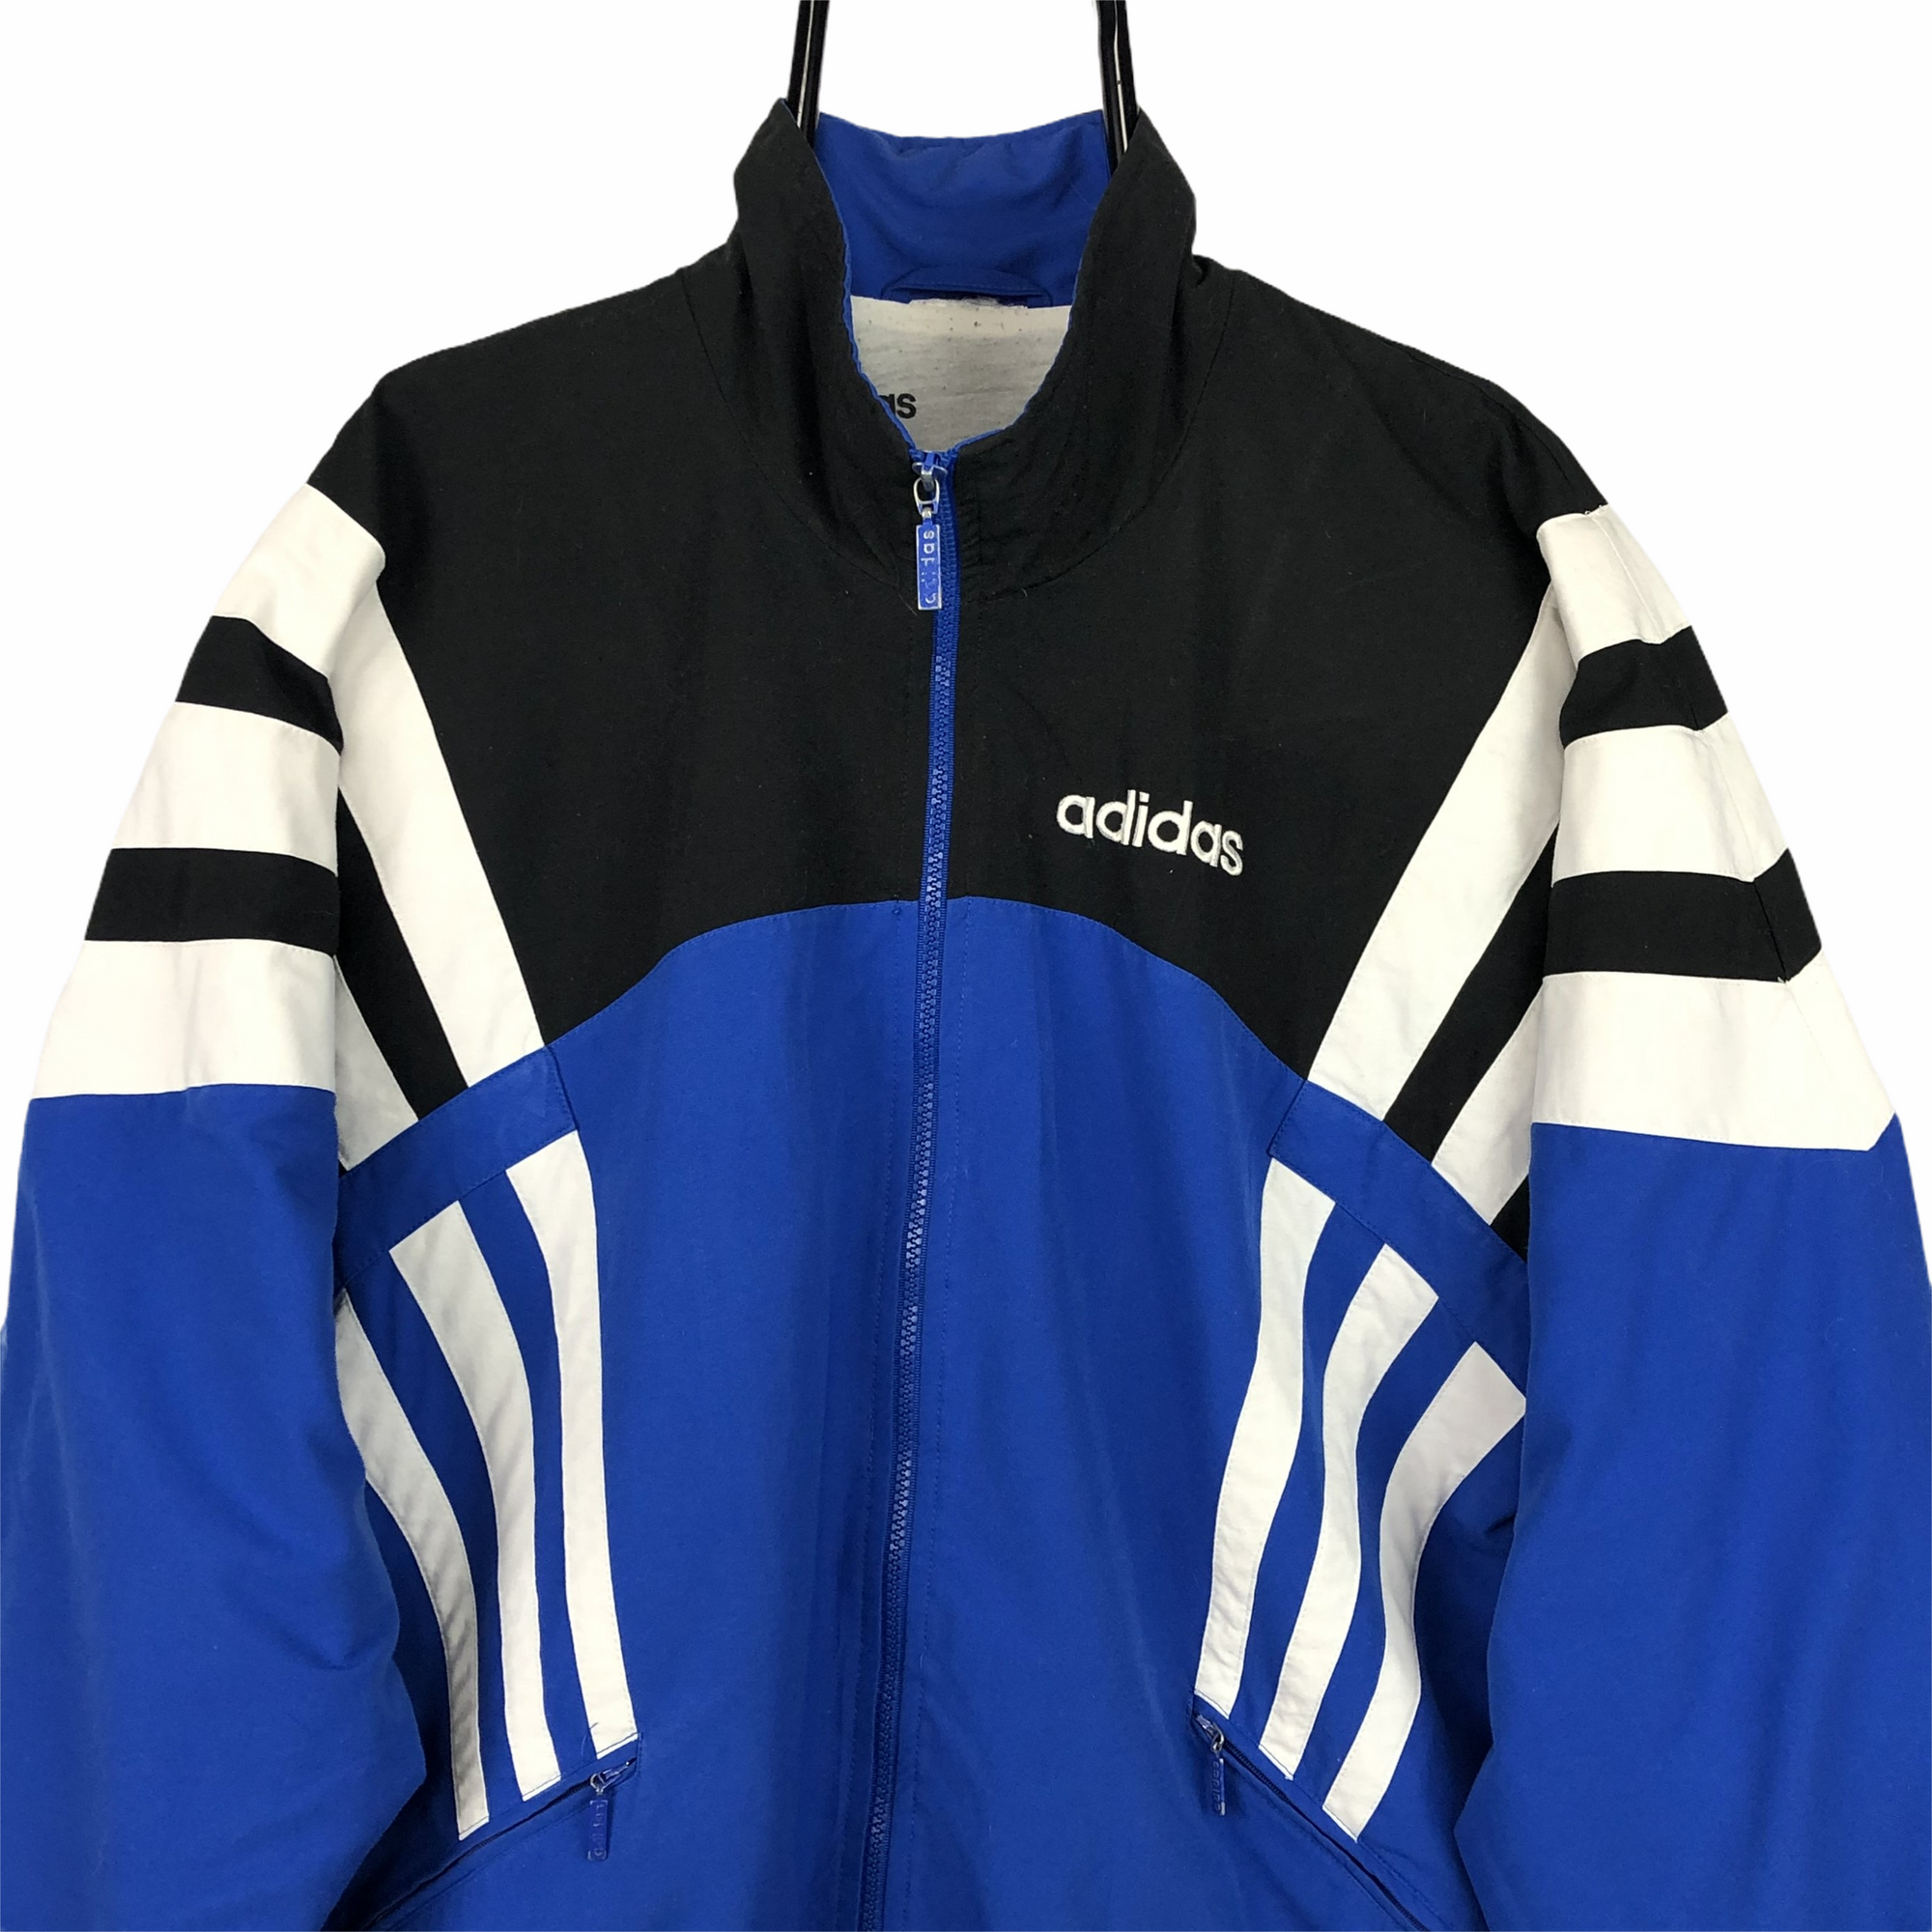 Vintage 90s Adidas Track Jacket in Blue/Black/White - Men's XL/Women's XXL